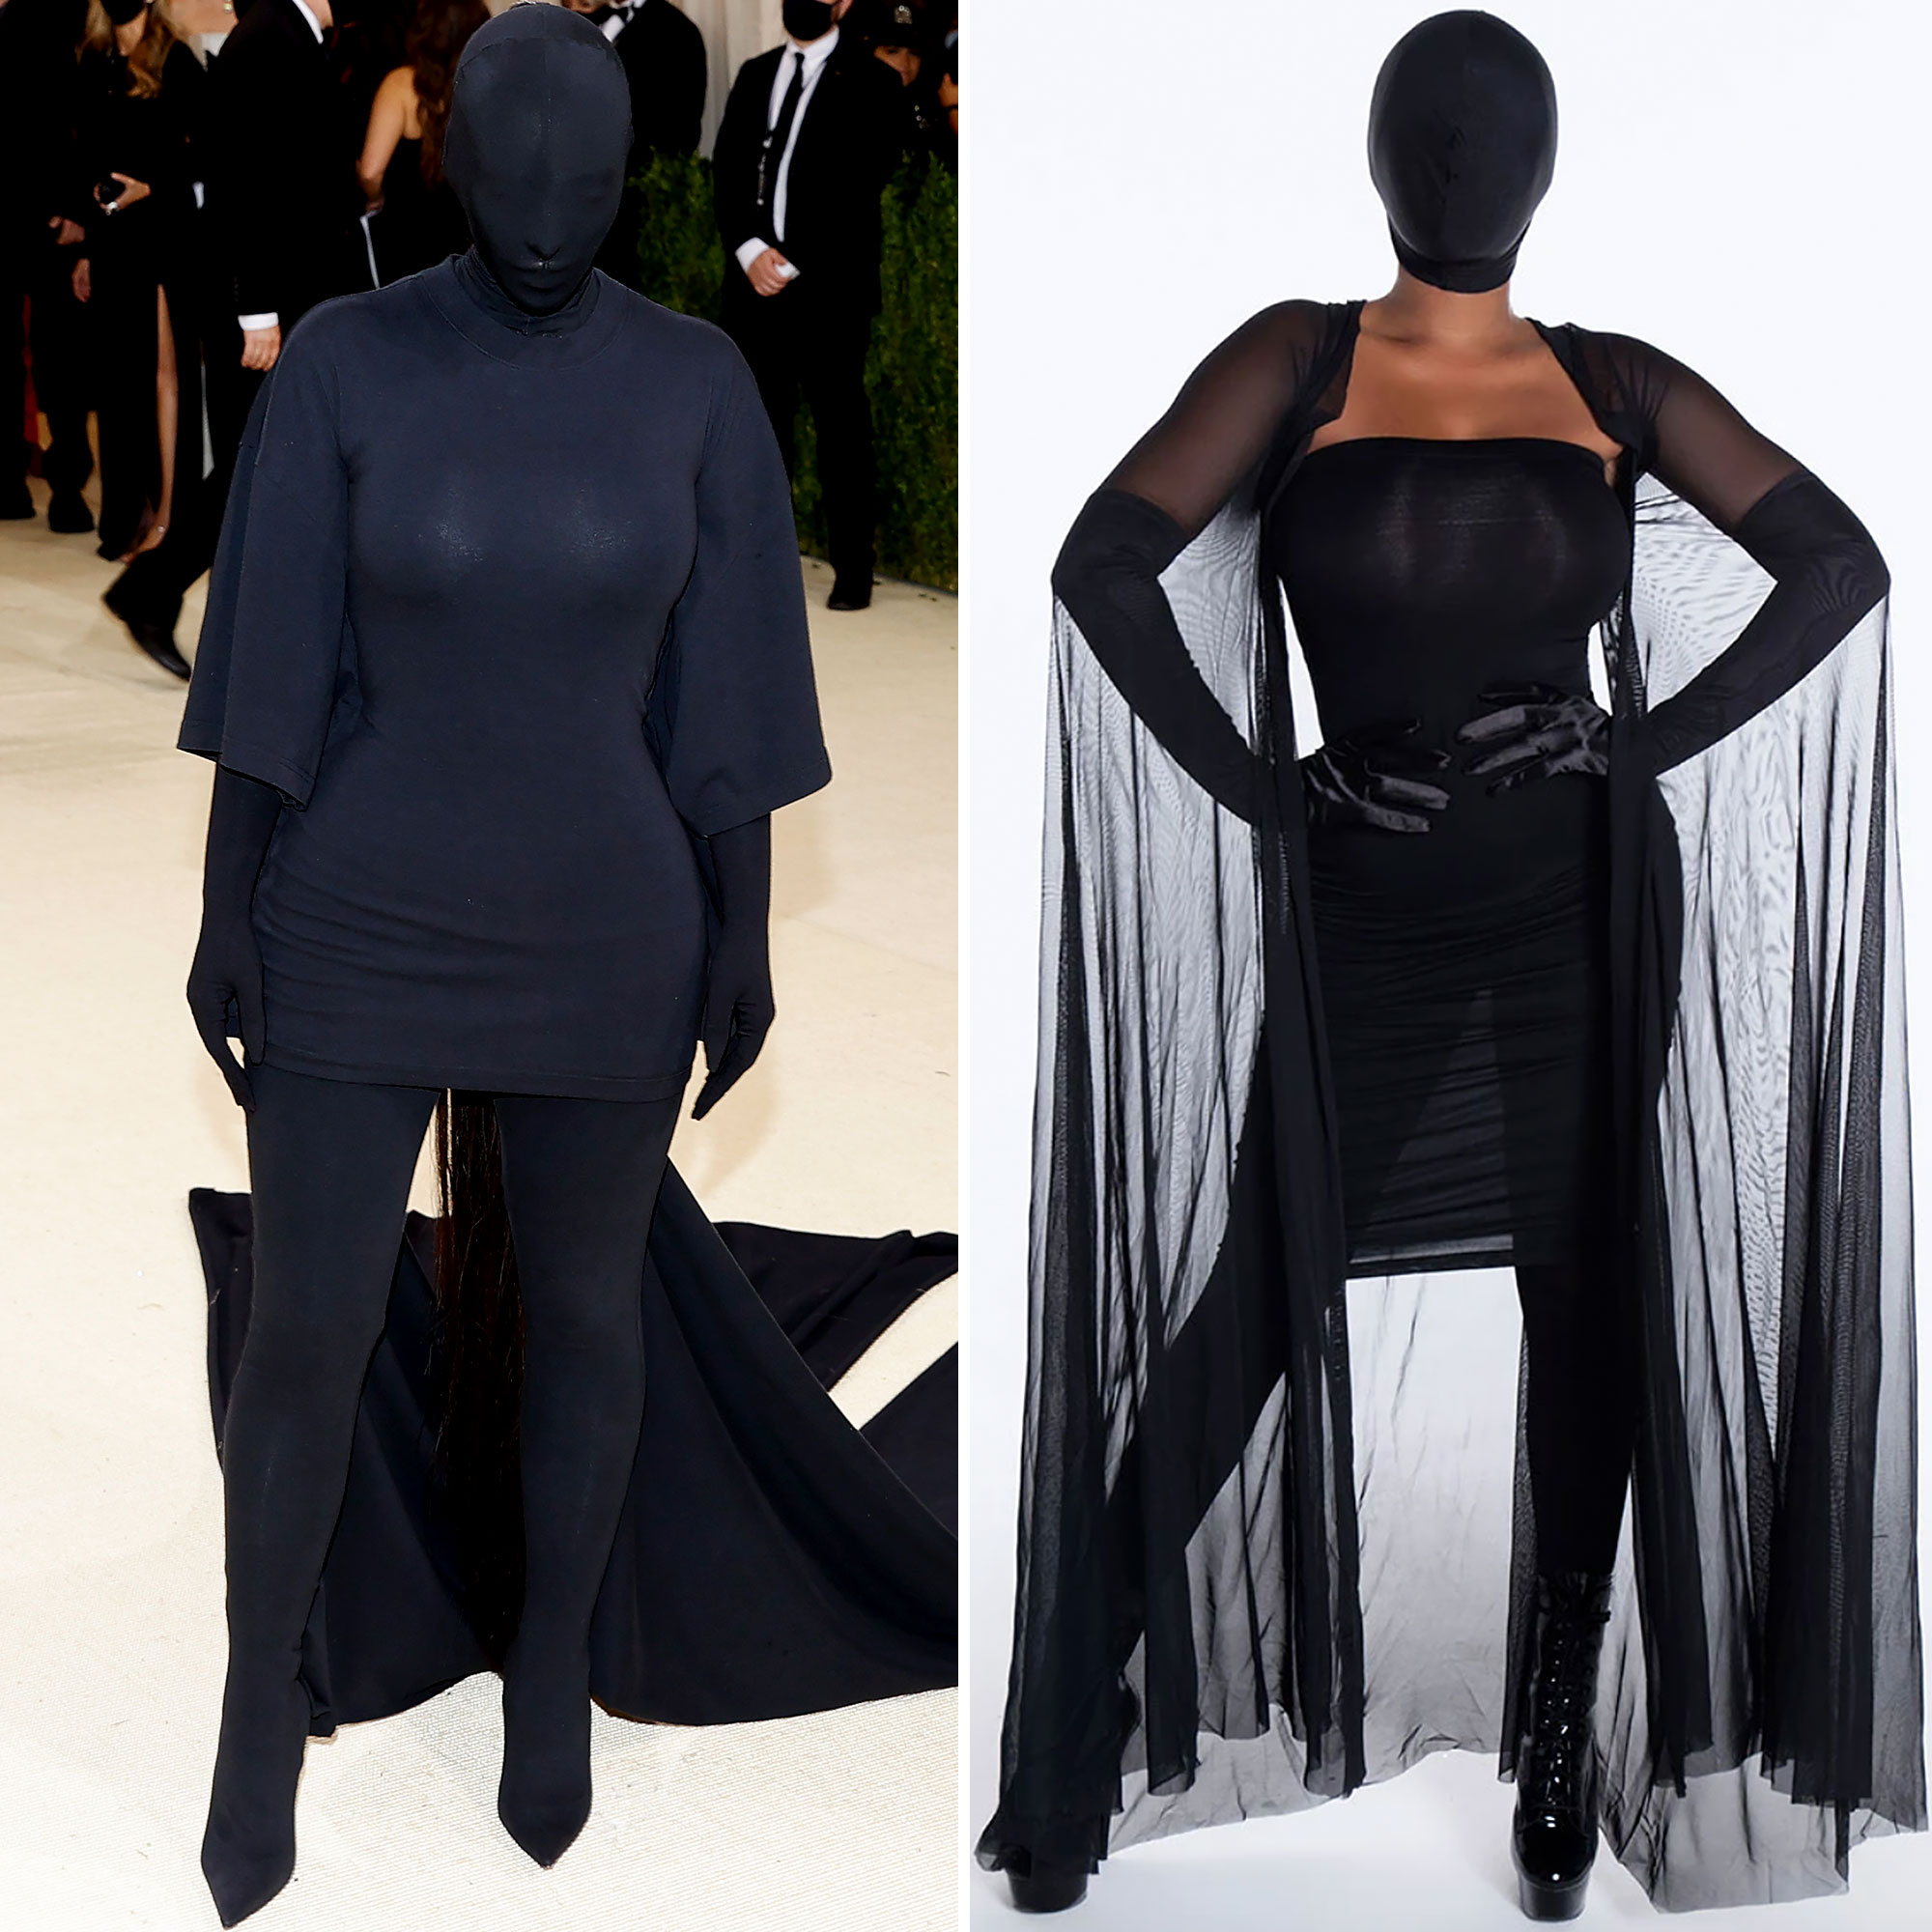 Kim Kardashian 2021 Met Gala Look Is Now a Sexy Halloween Costume